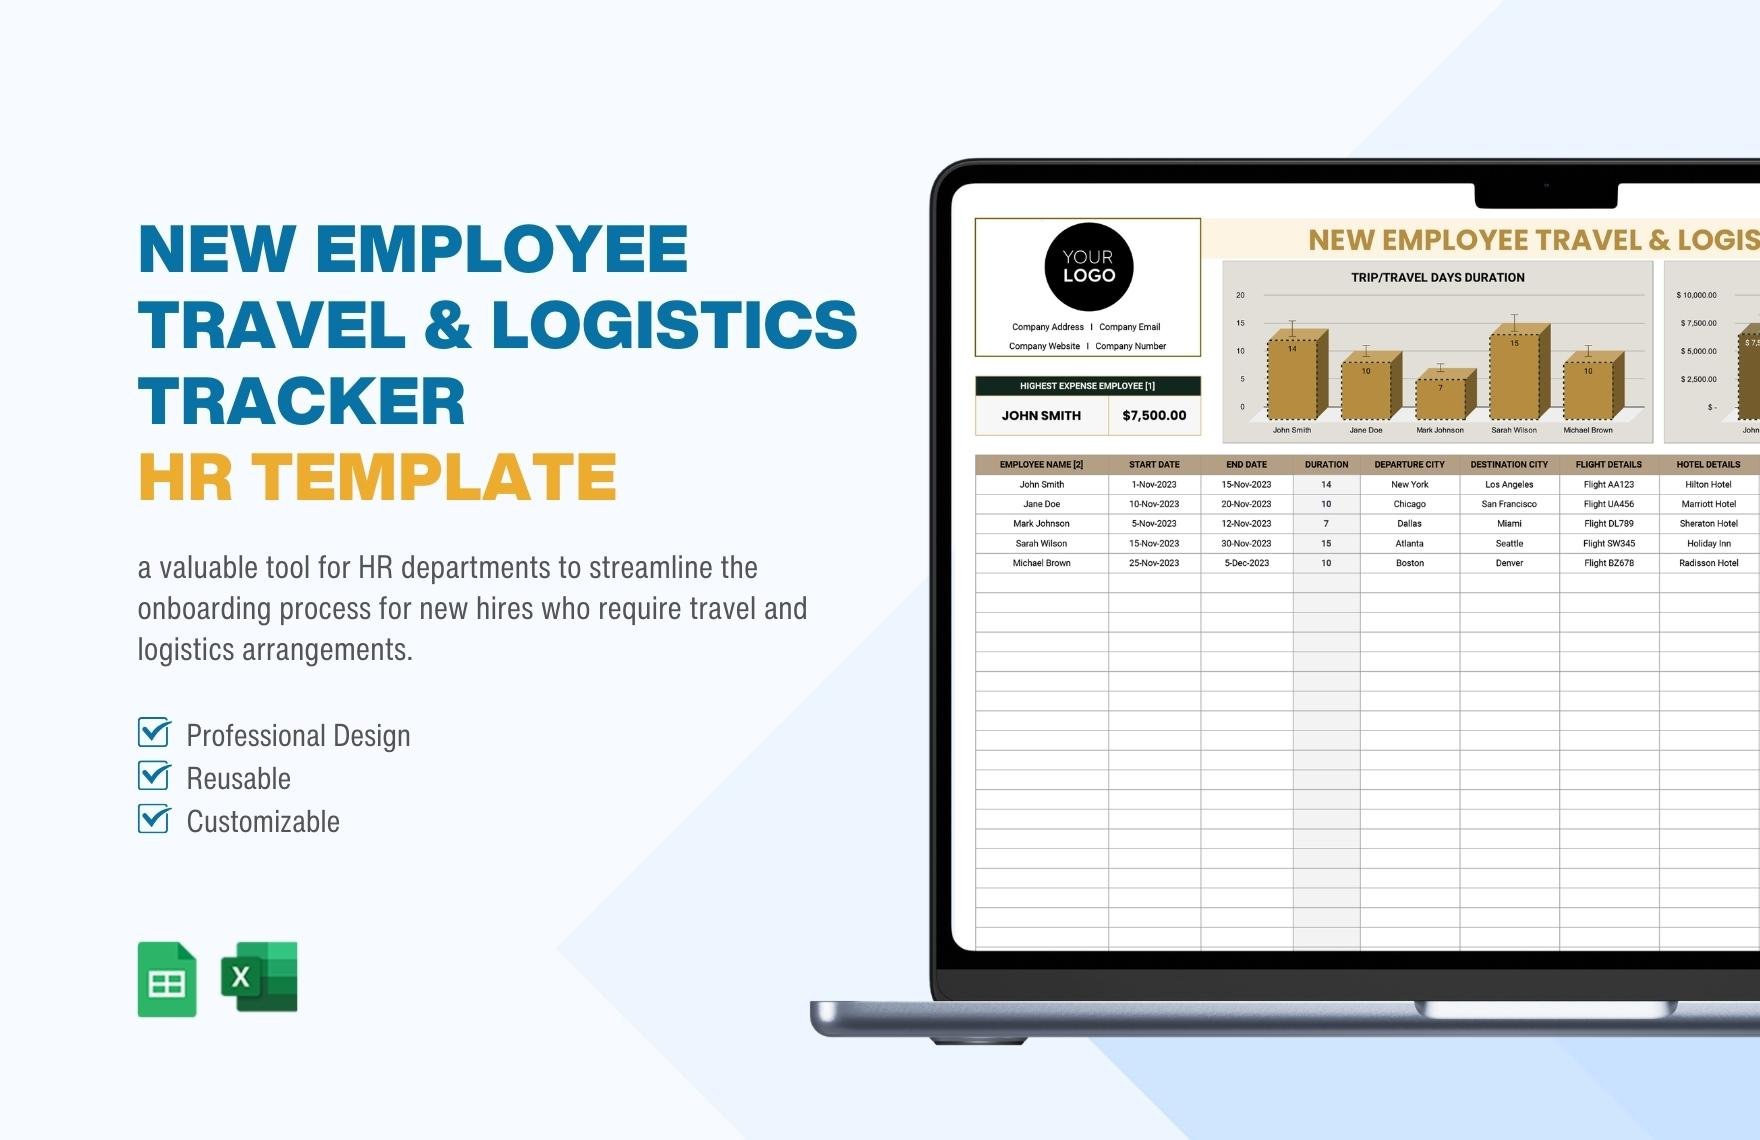 New Employee Travel & Logistics Tracker HR Template